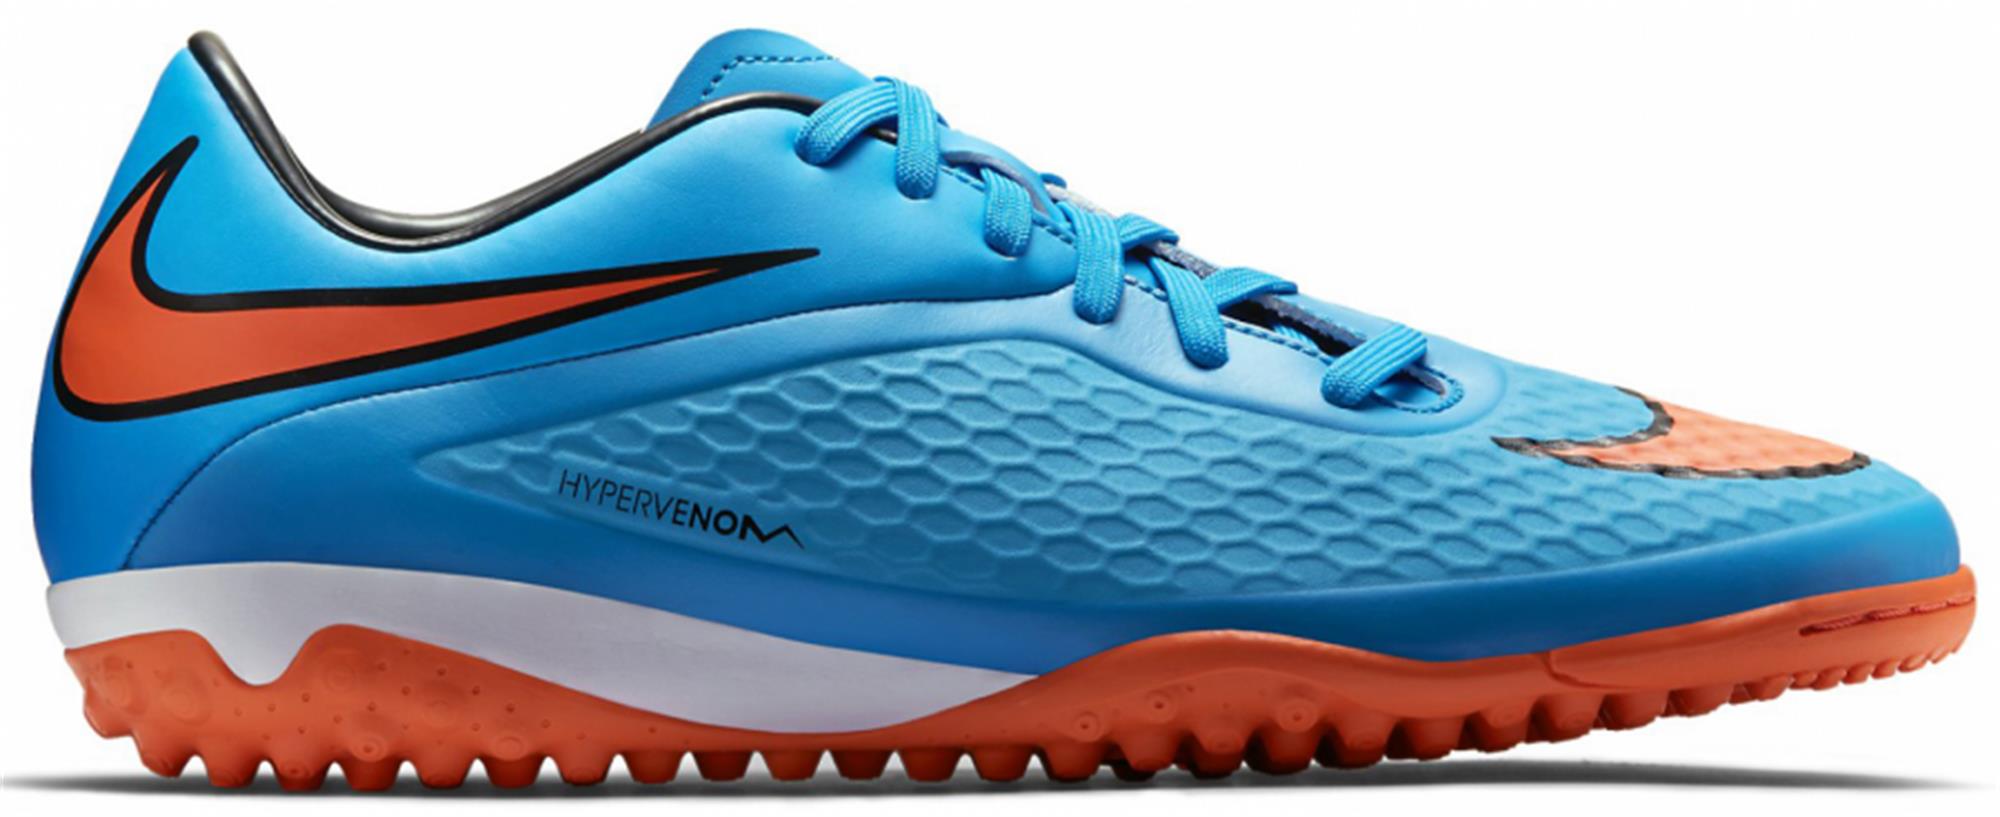 Nike Hypervenom Phantom III DF FG Blue Soccer Cleats